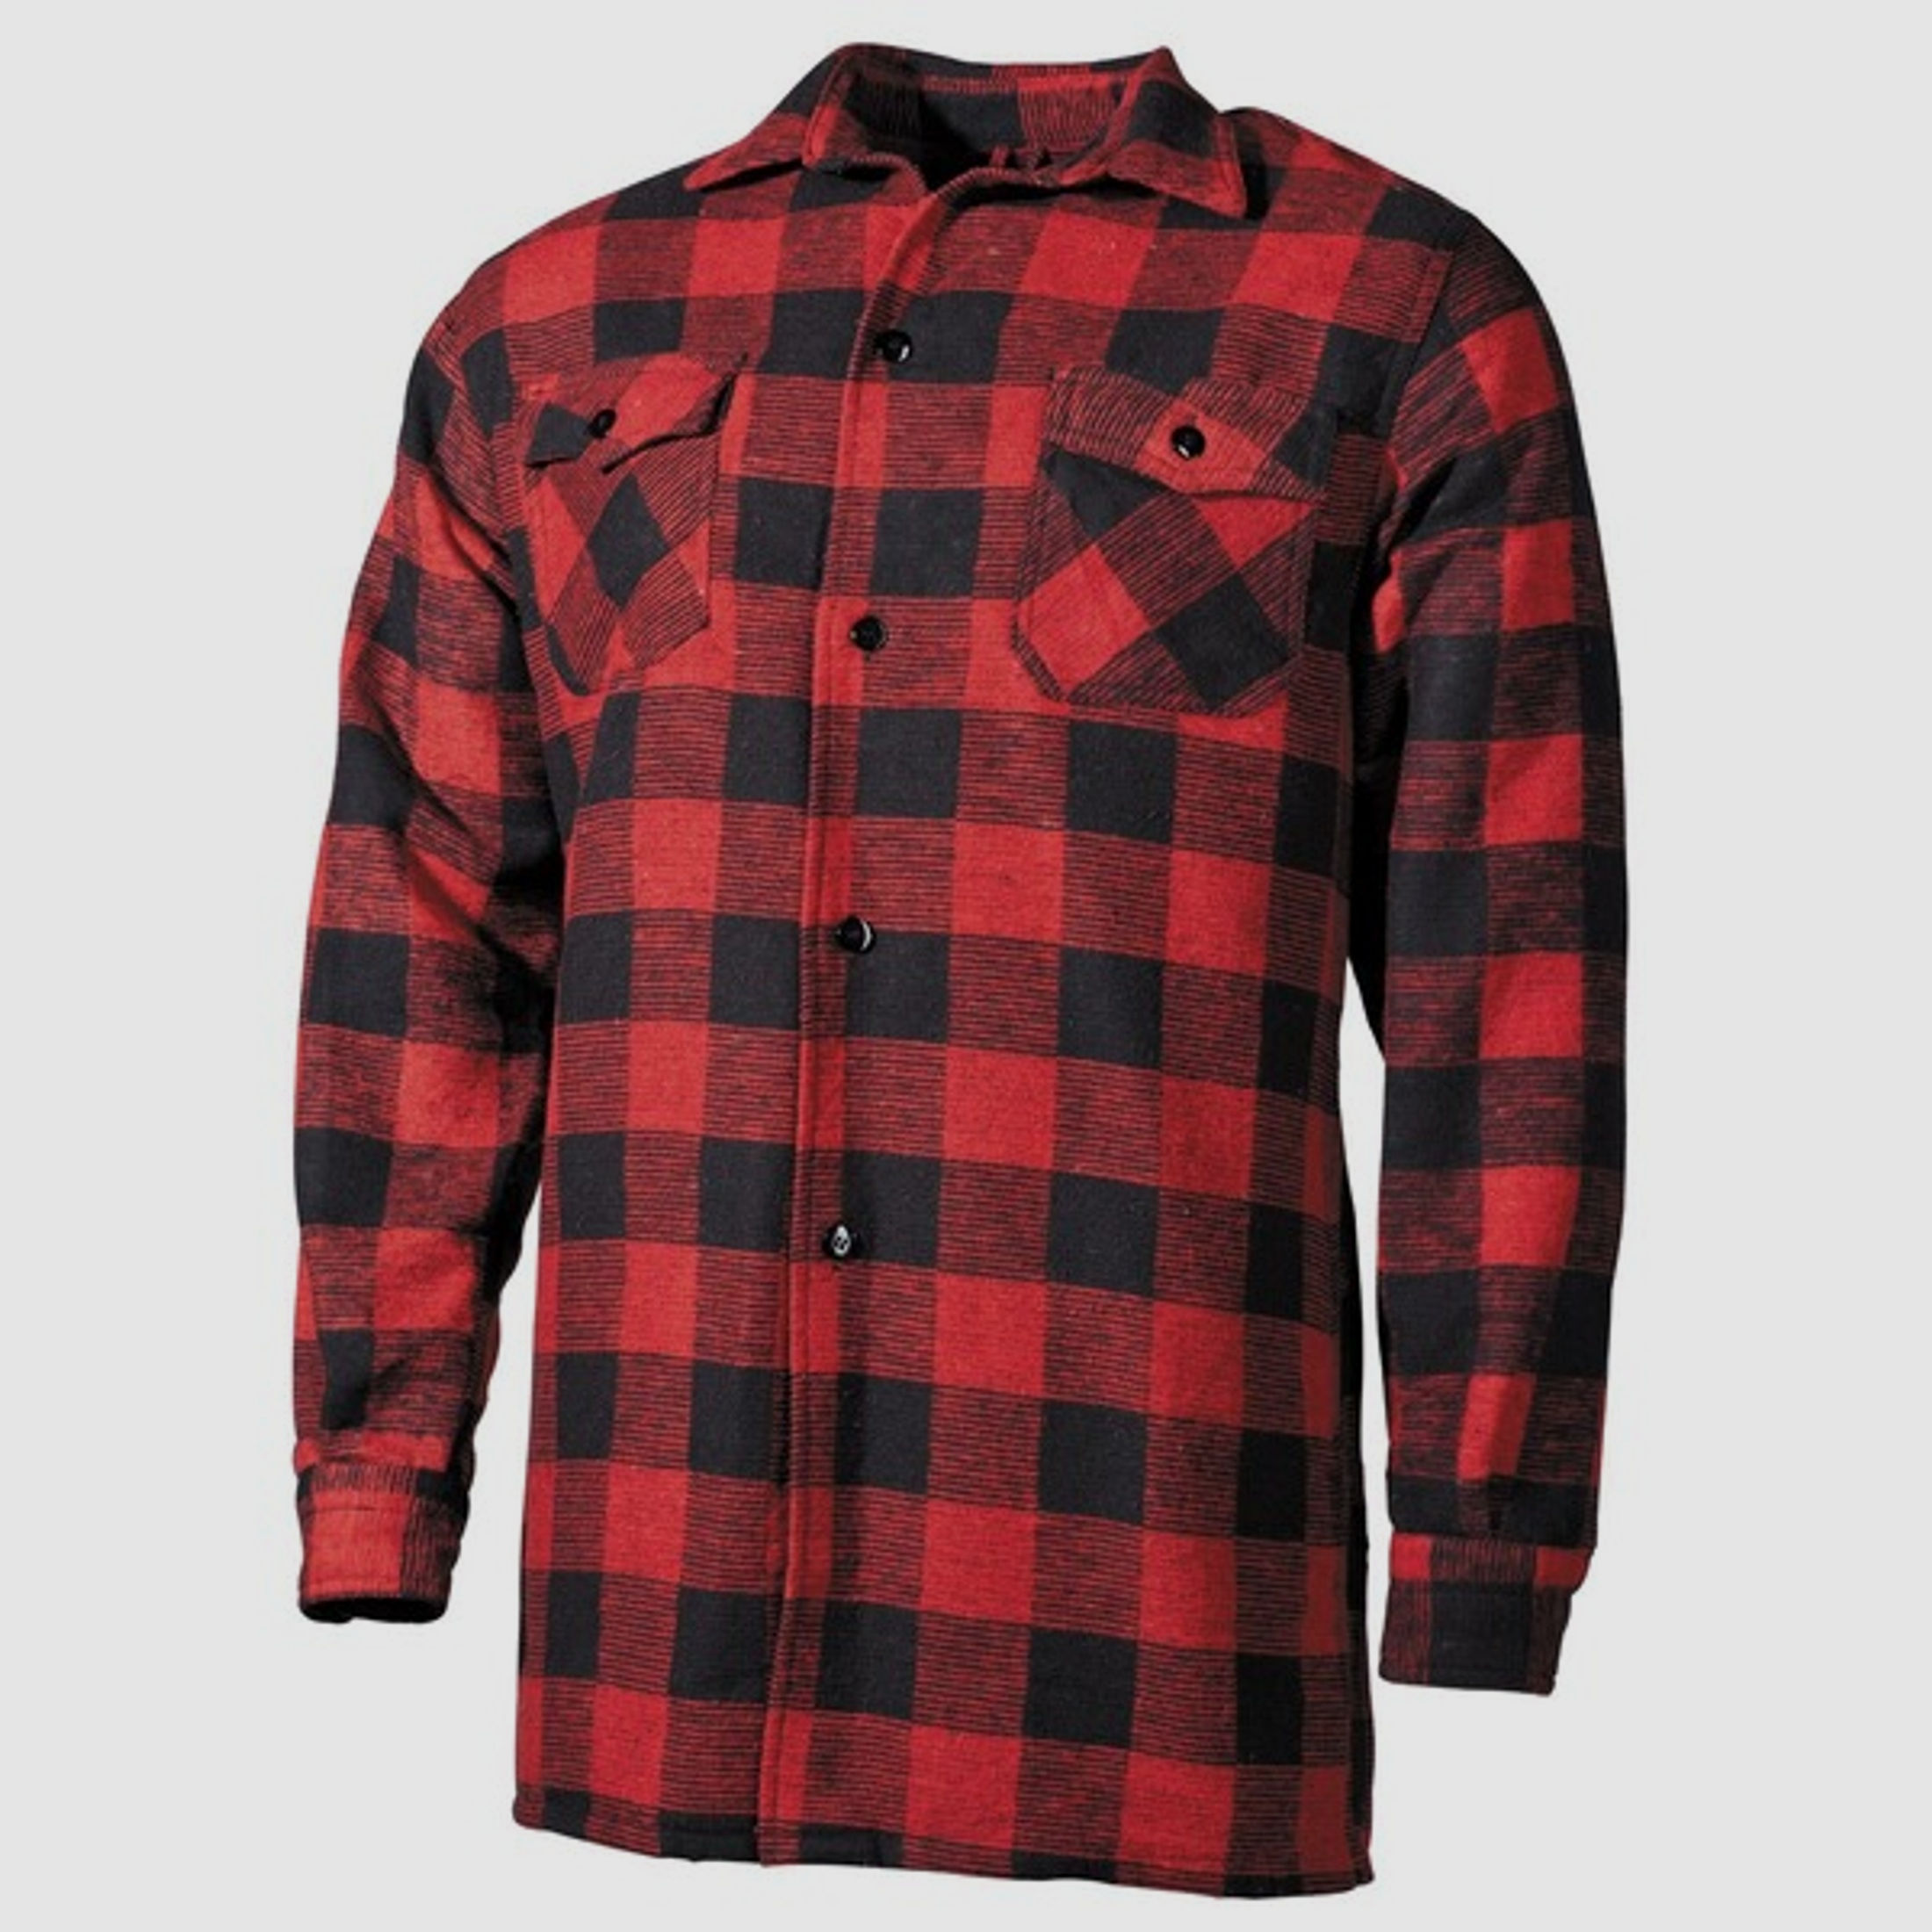 Holzfällerhemd Gr. XL Rot - Schwarz / Karohemd Flanellhemd